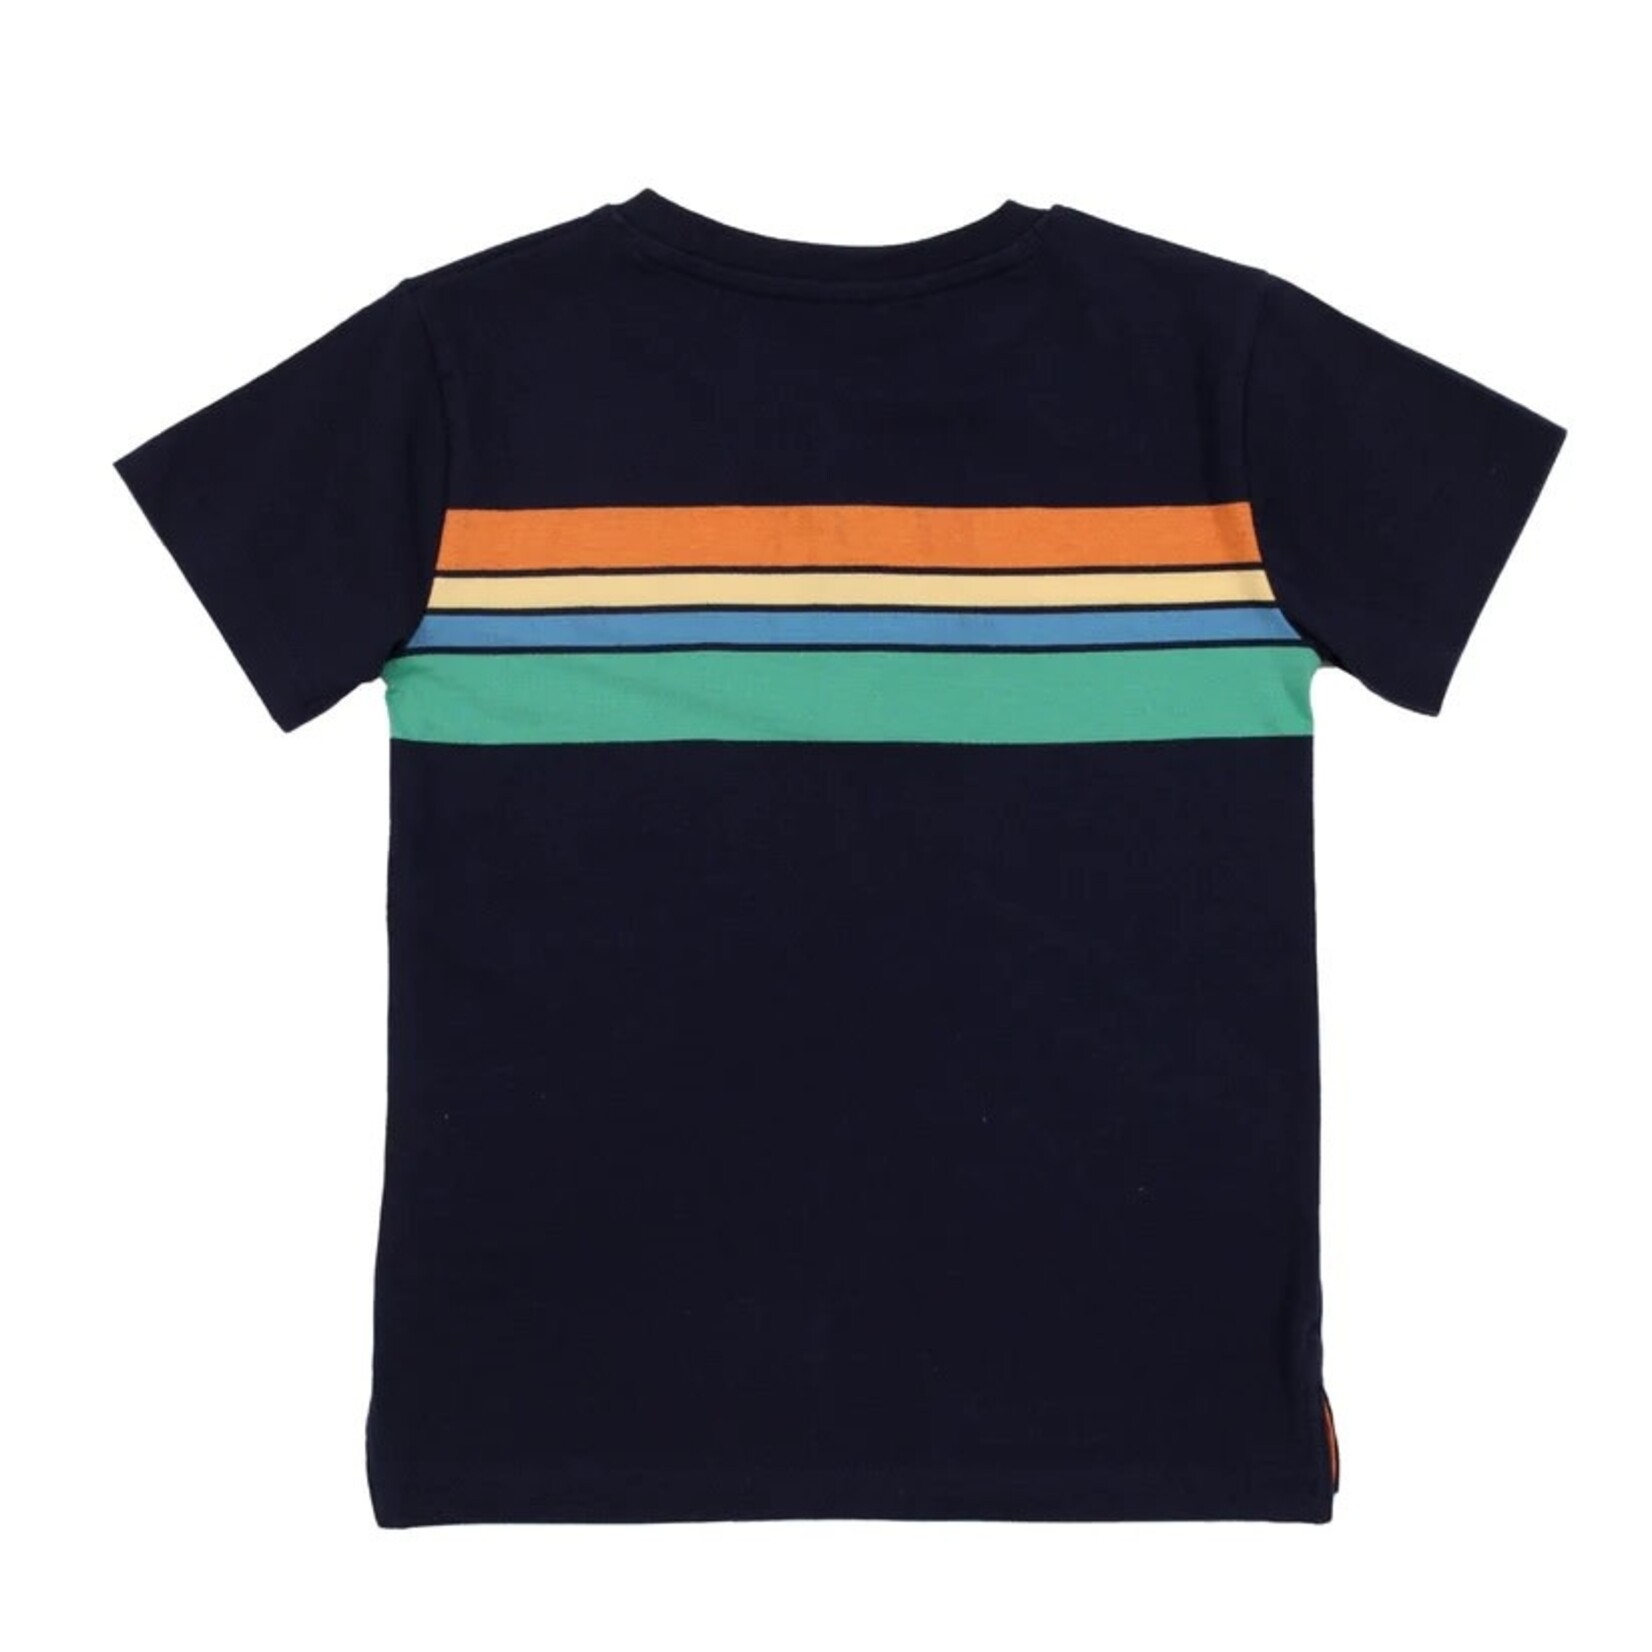 Nanö NANÖ - Navy short-sleeved t-shirt with thin light blue, yellow, orange, mint green stripes - 'Cap sur la méditerranée'